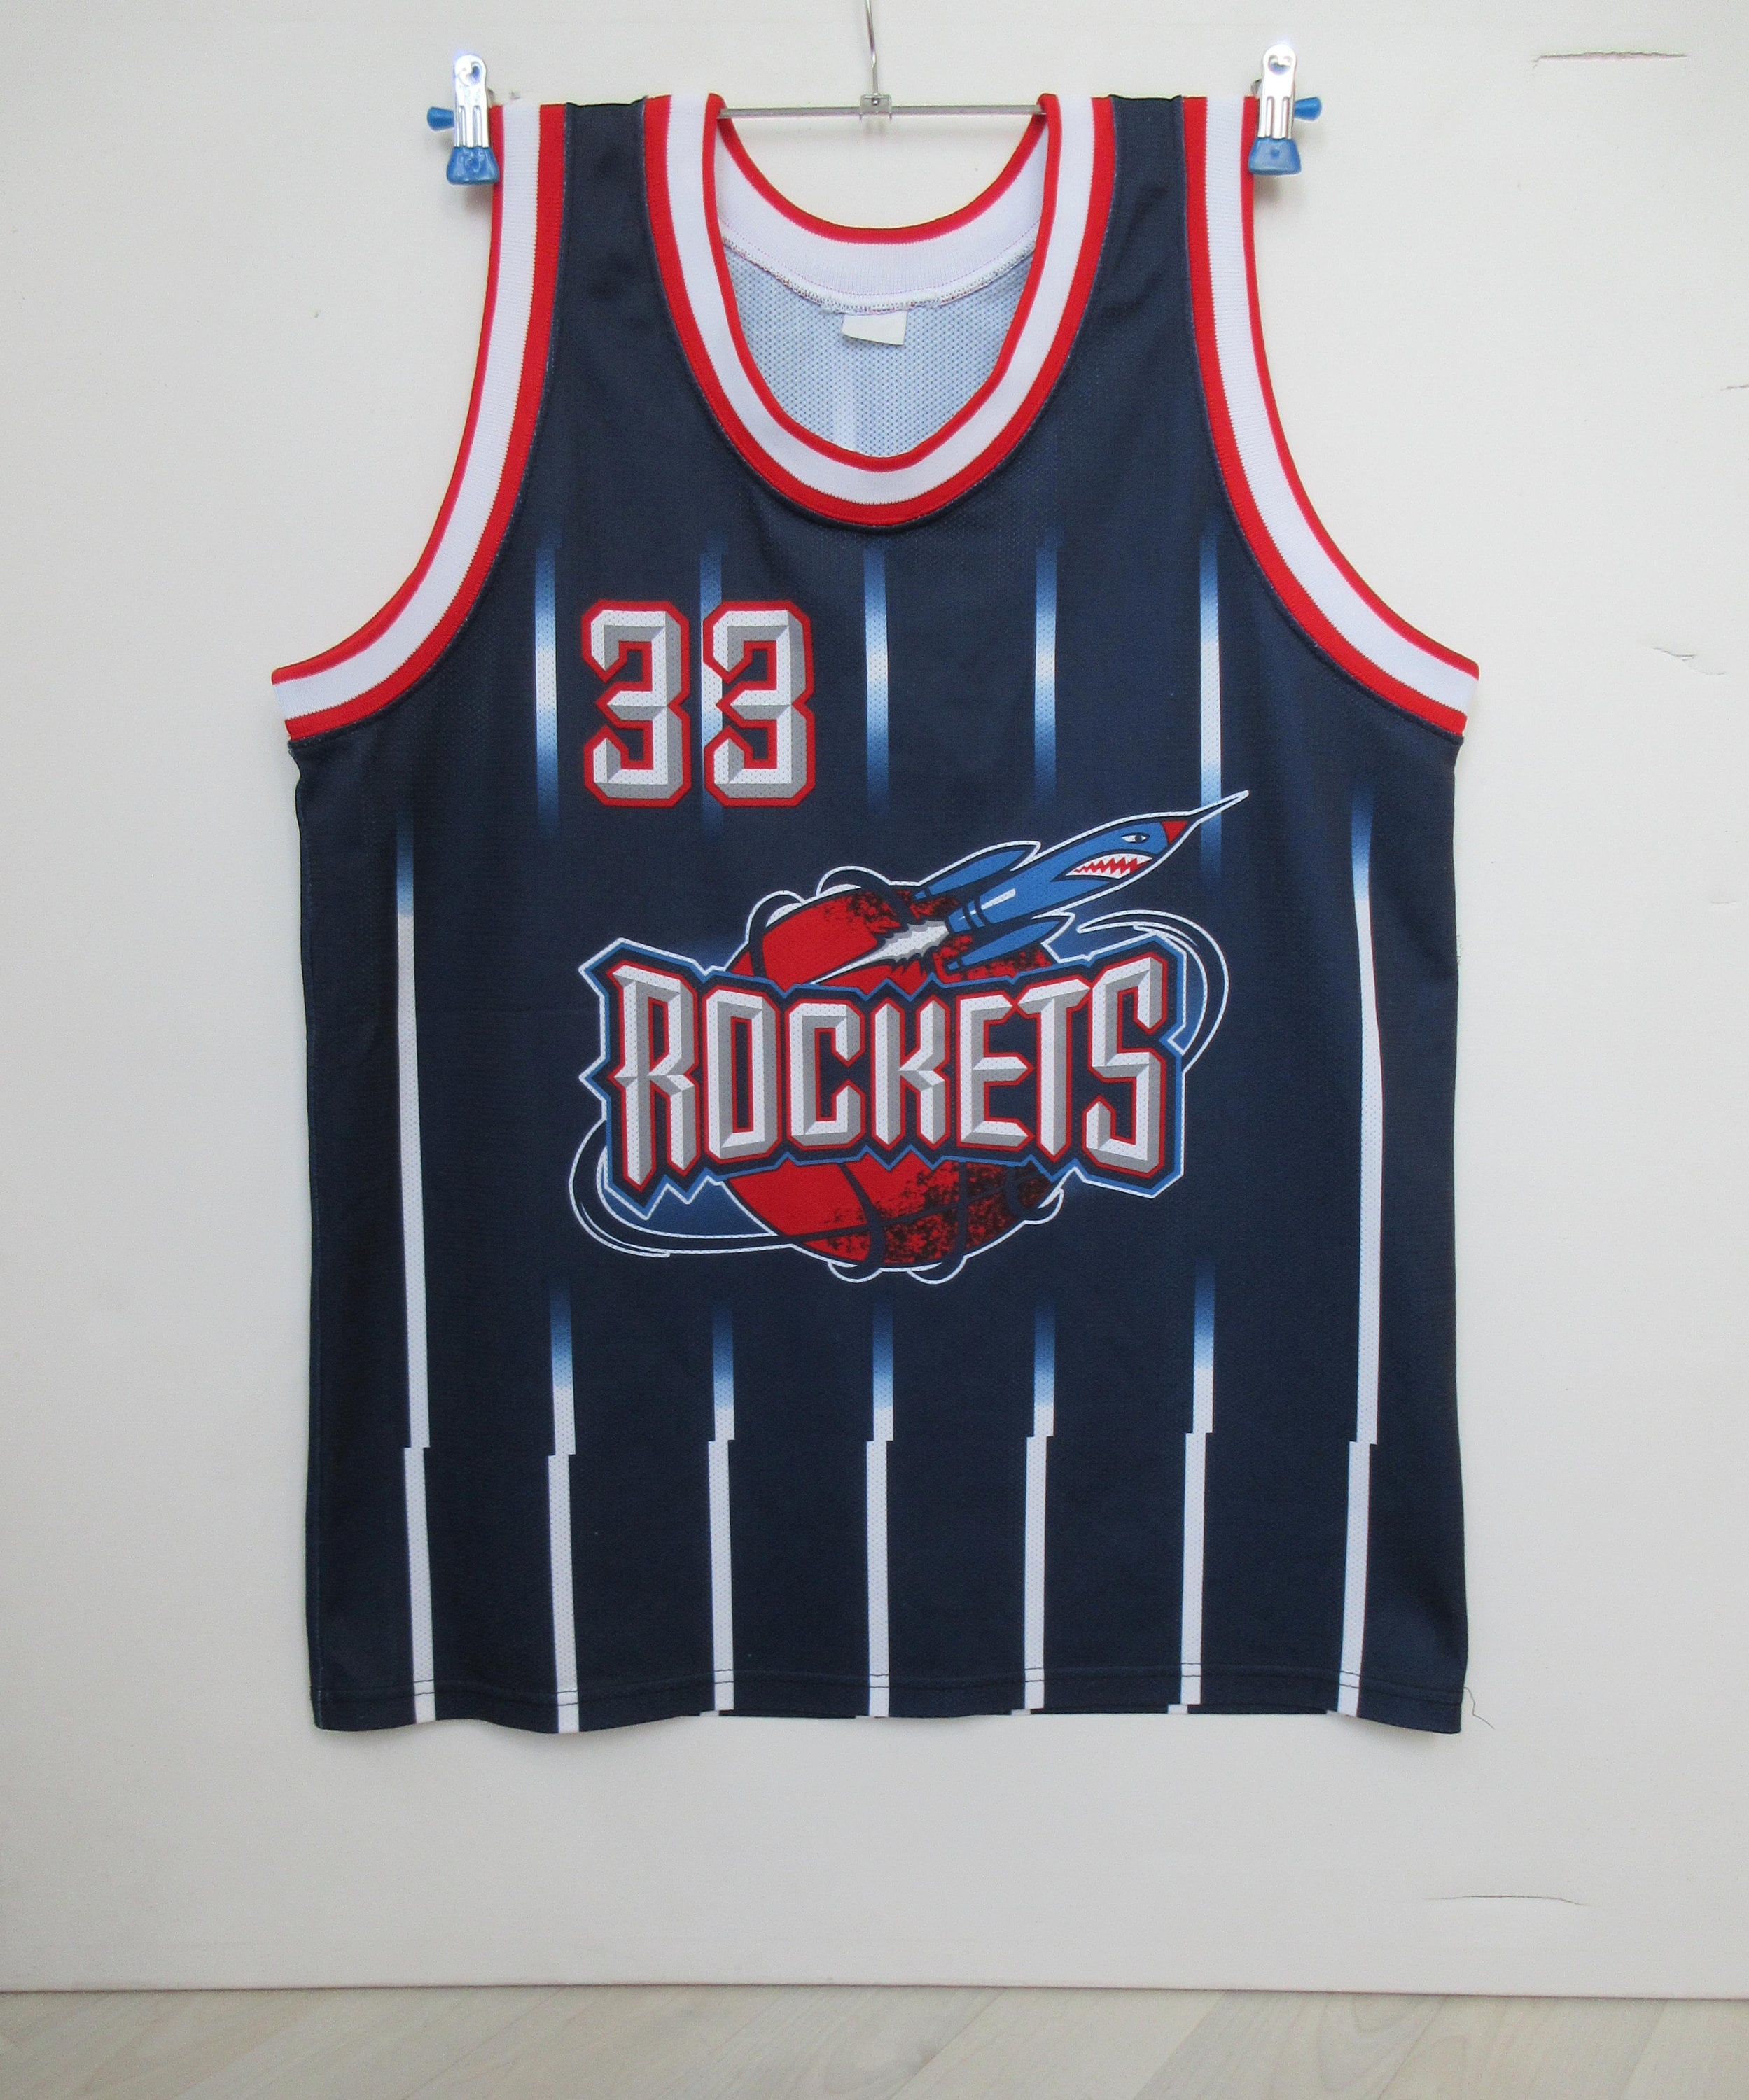 Wyco Vintage 1990s Clyde Drexler Houston Rockets NBA Basketball Jersey